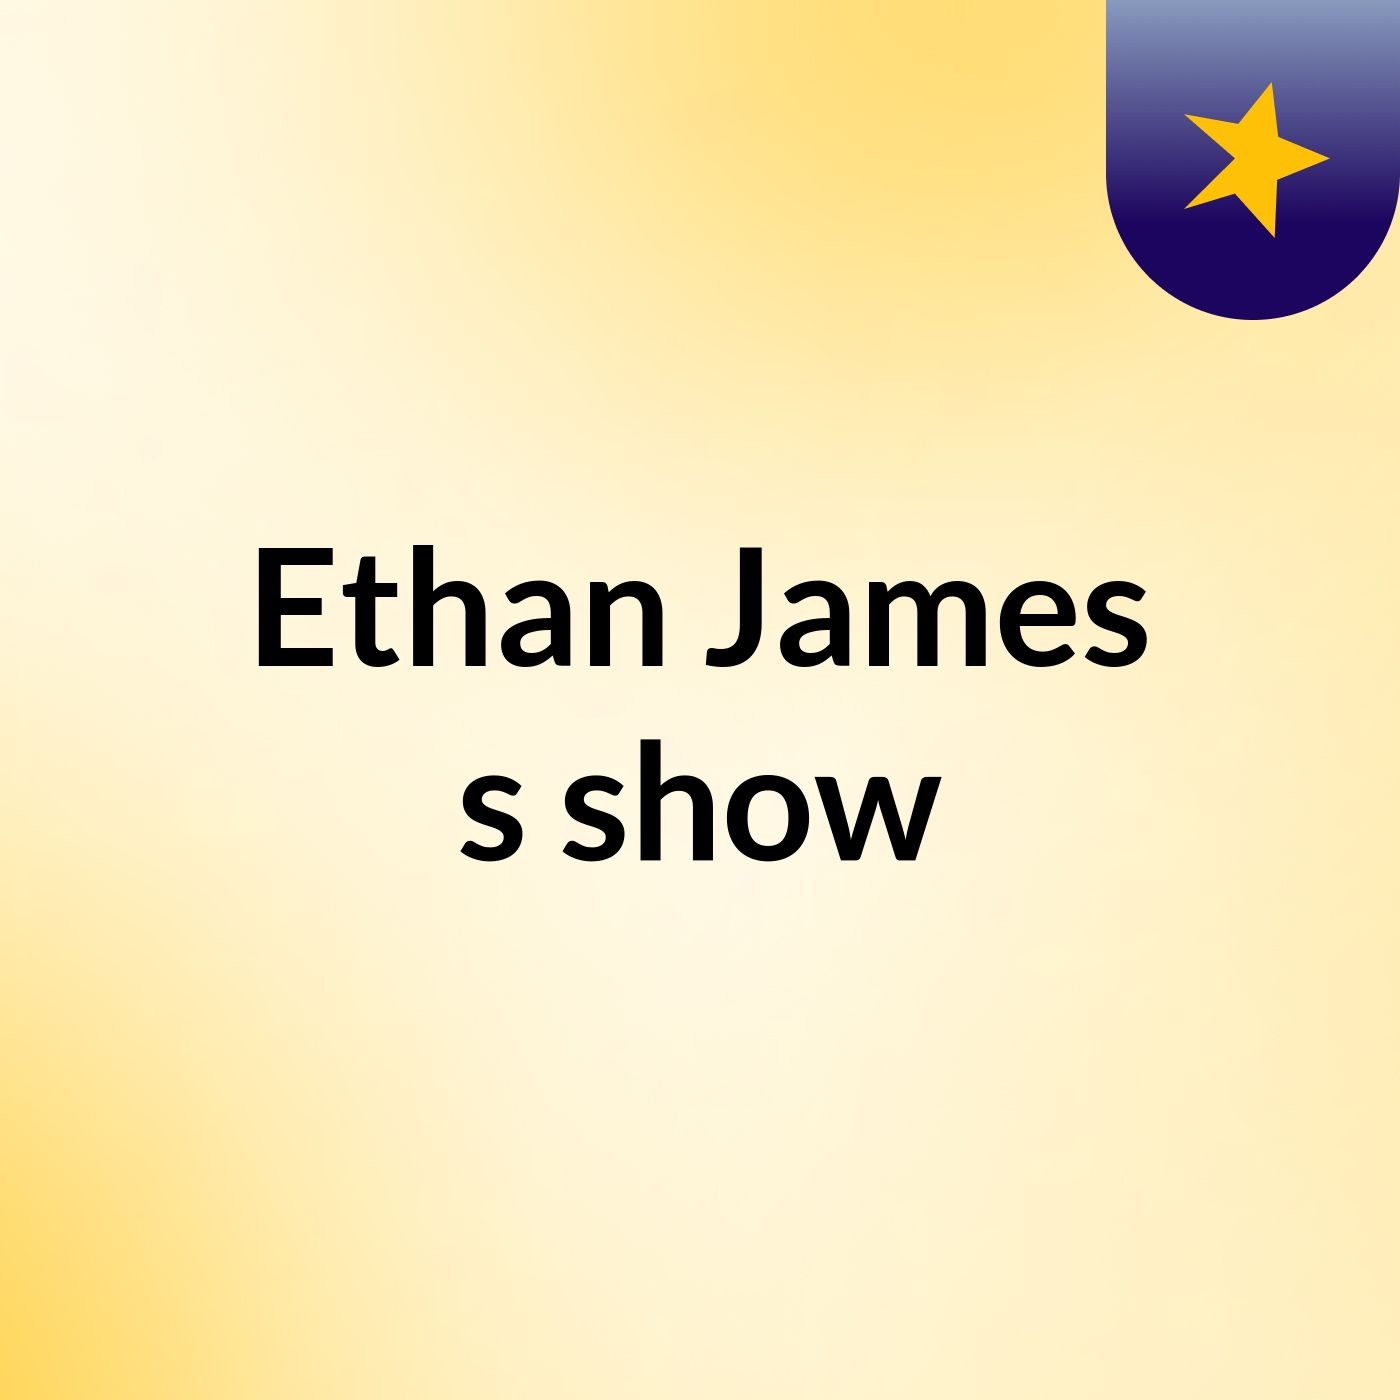 Ethan James's show